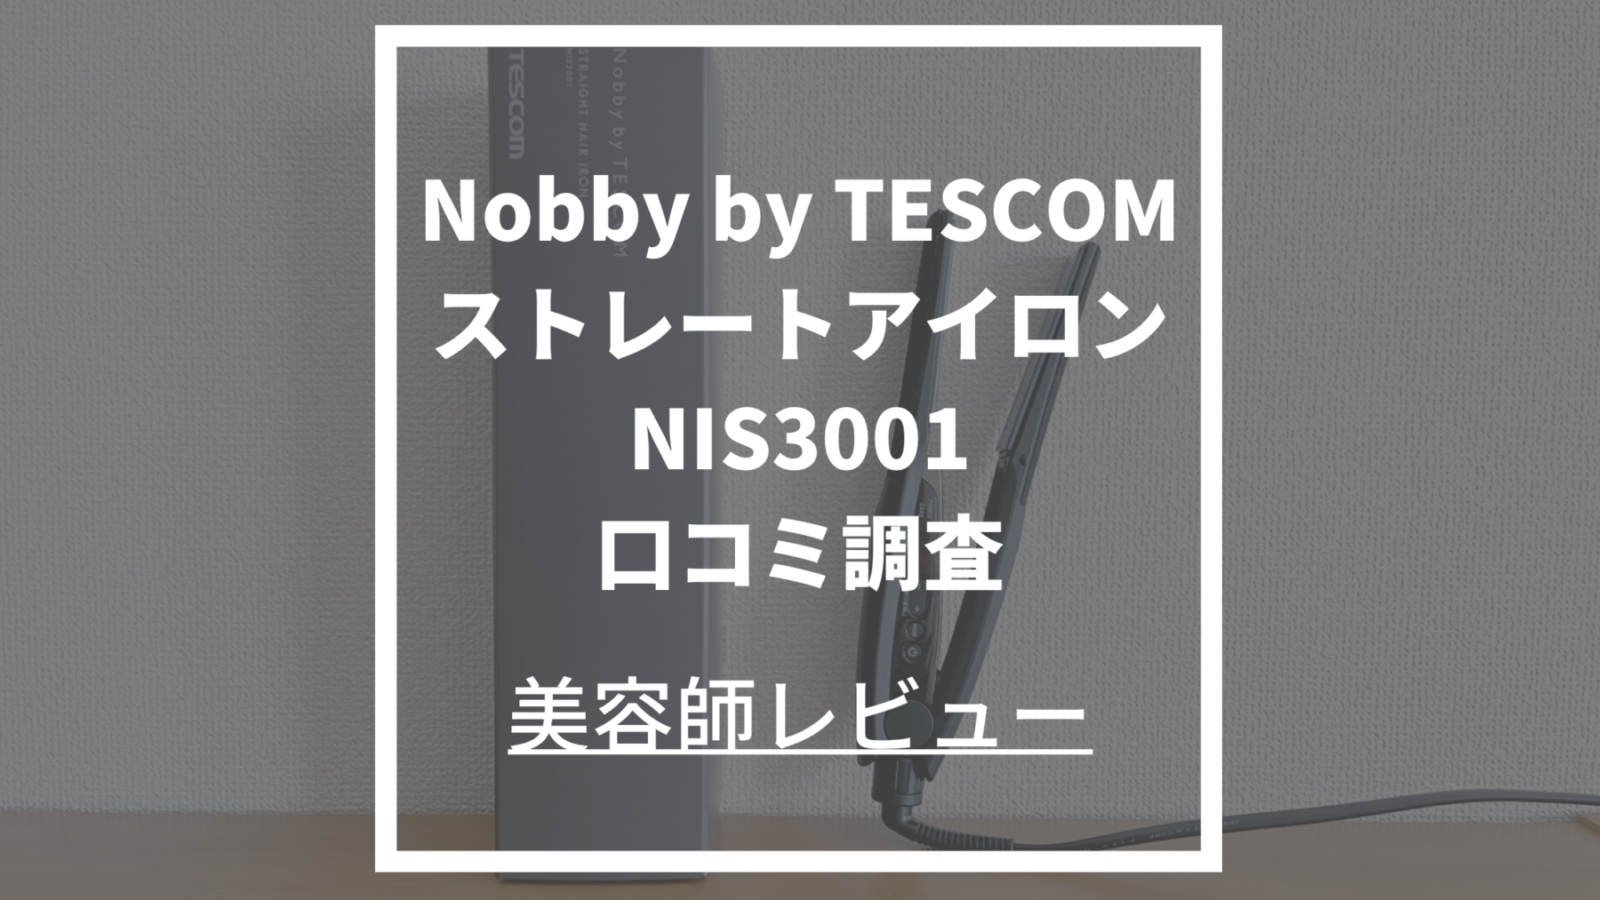 Nobby by TESCOM NIS3001(K) BLACK - 1